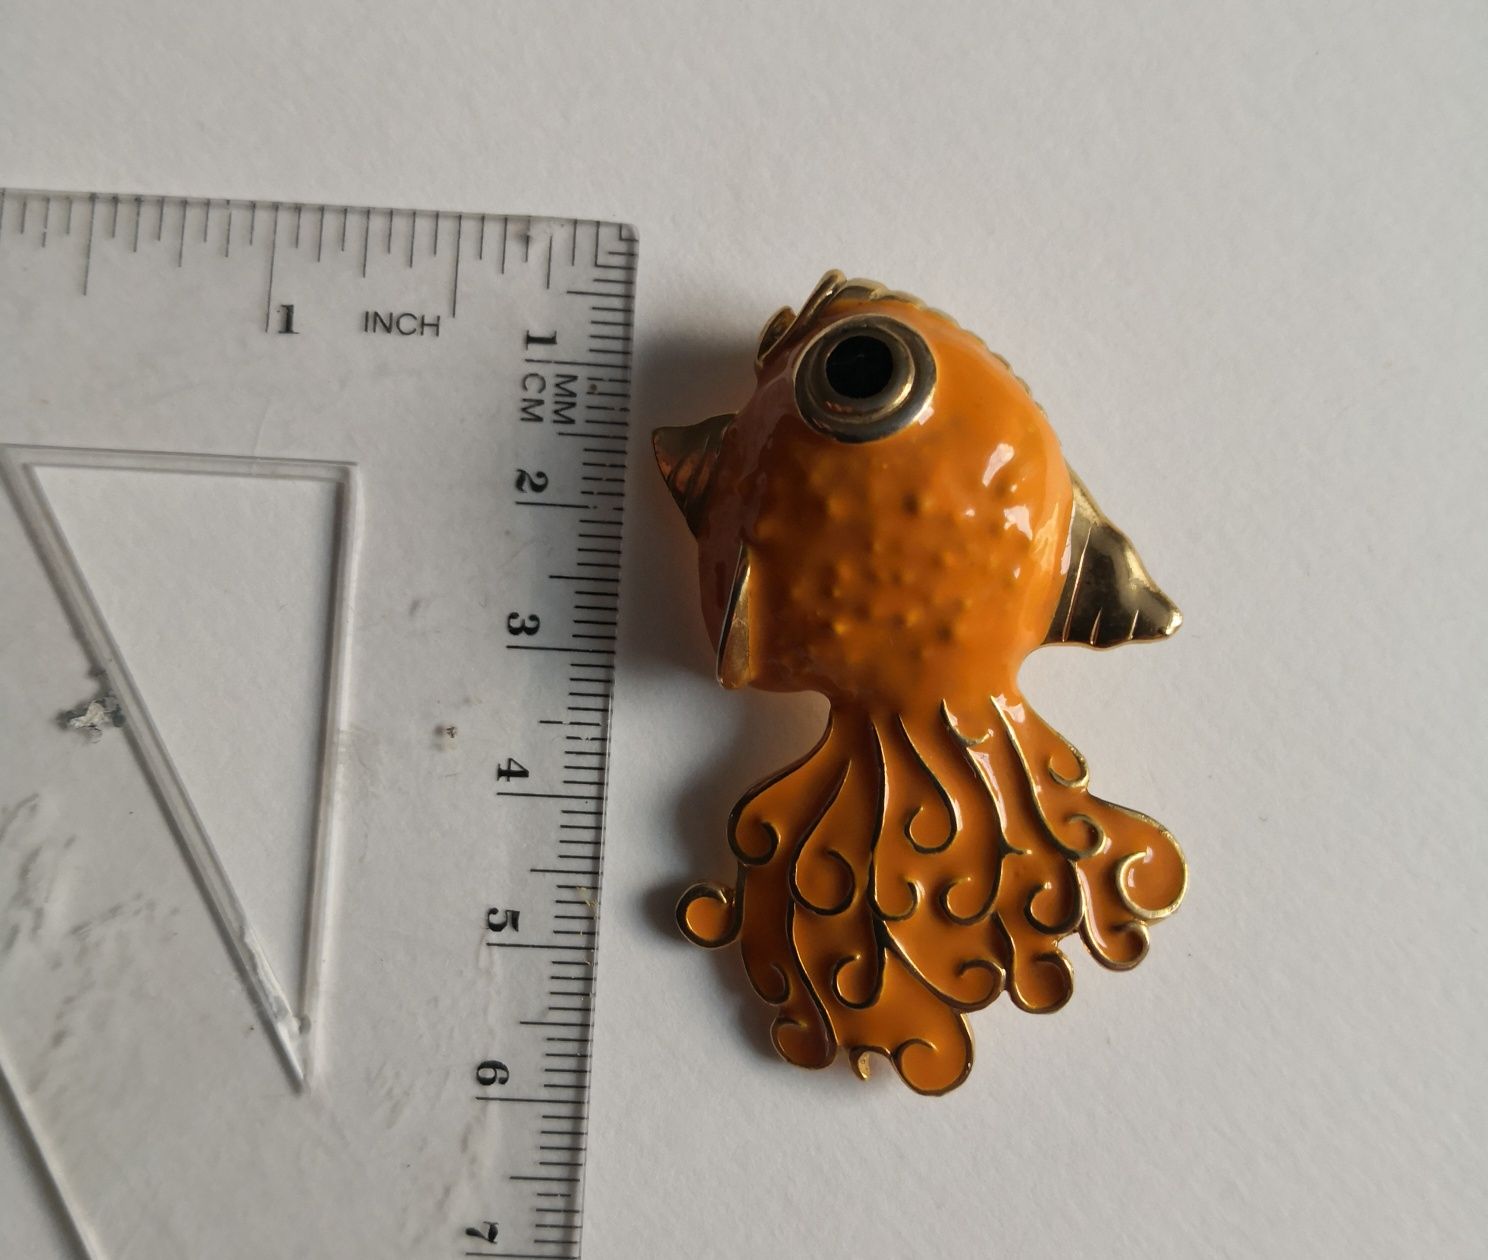 Broszka przypinka Jablonex biżuteria vintage aesthetic złota rybka